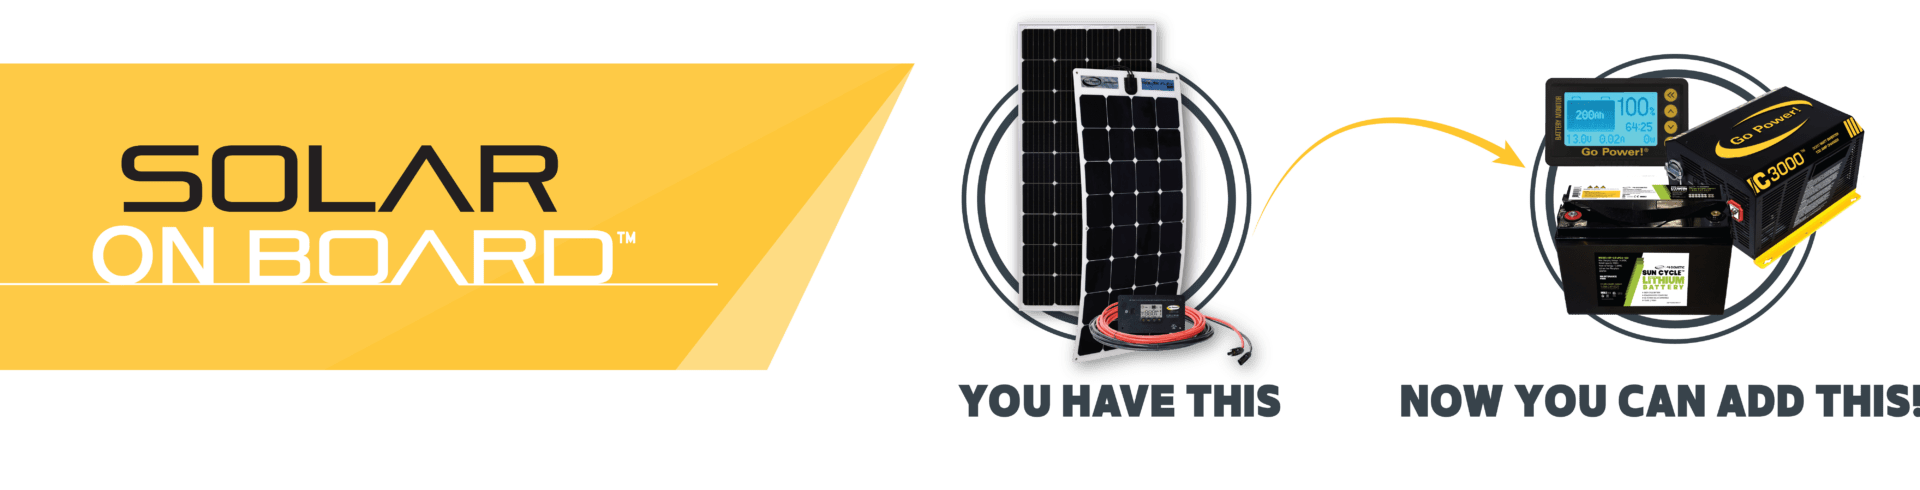 Solar on board header image